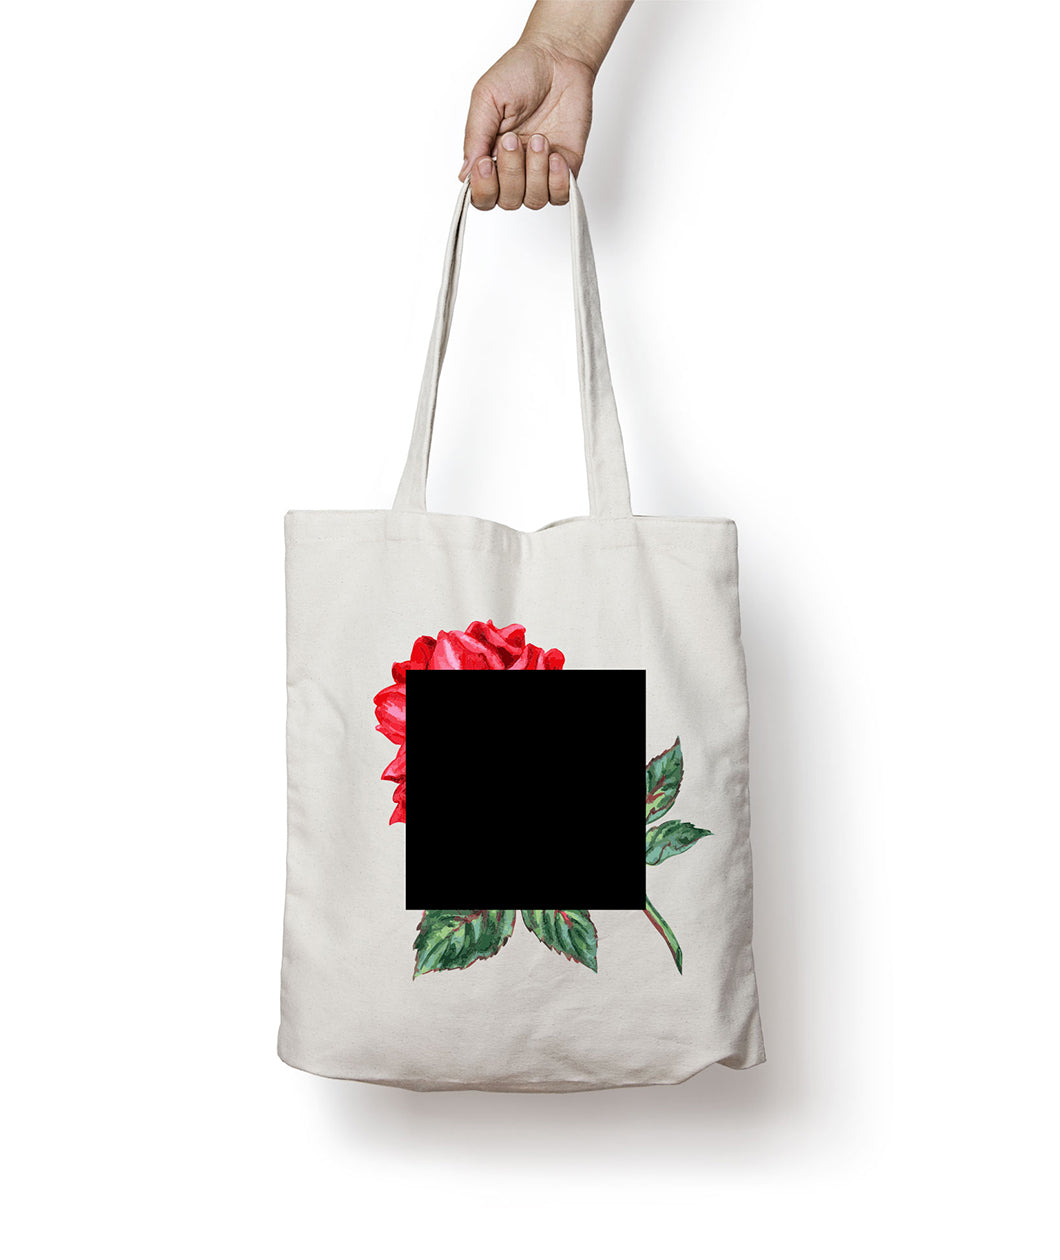 Agnes Martin Inspired Rose Art Tote Bag